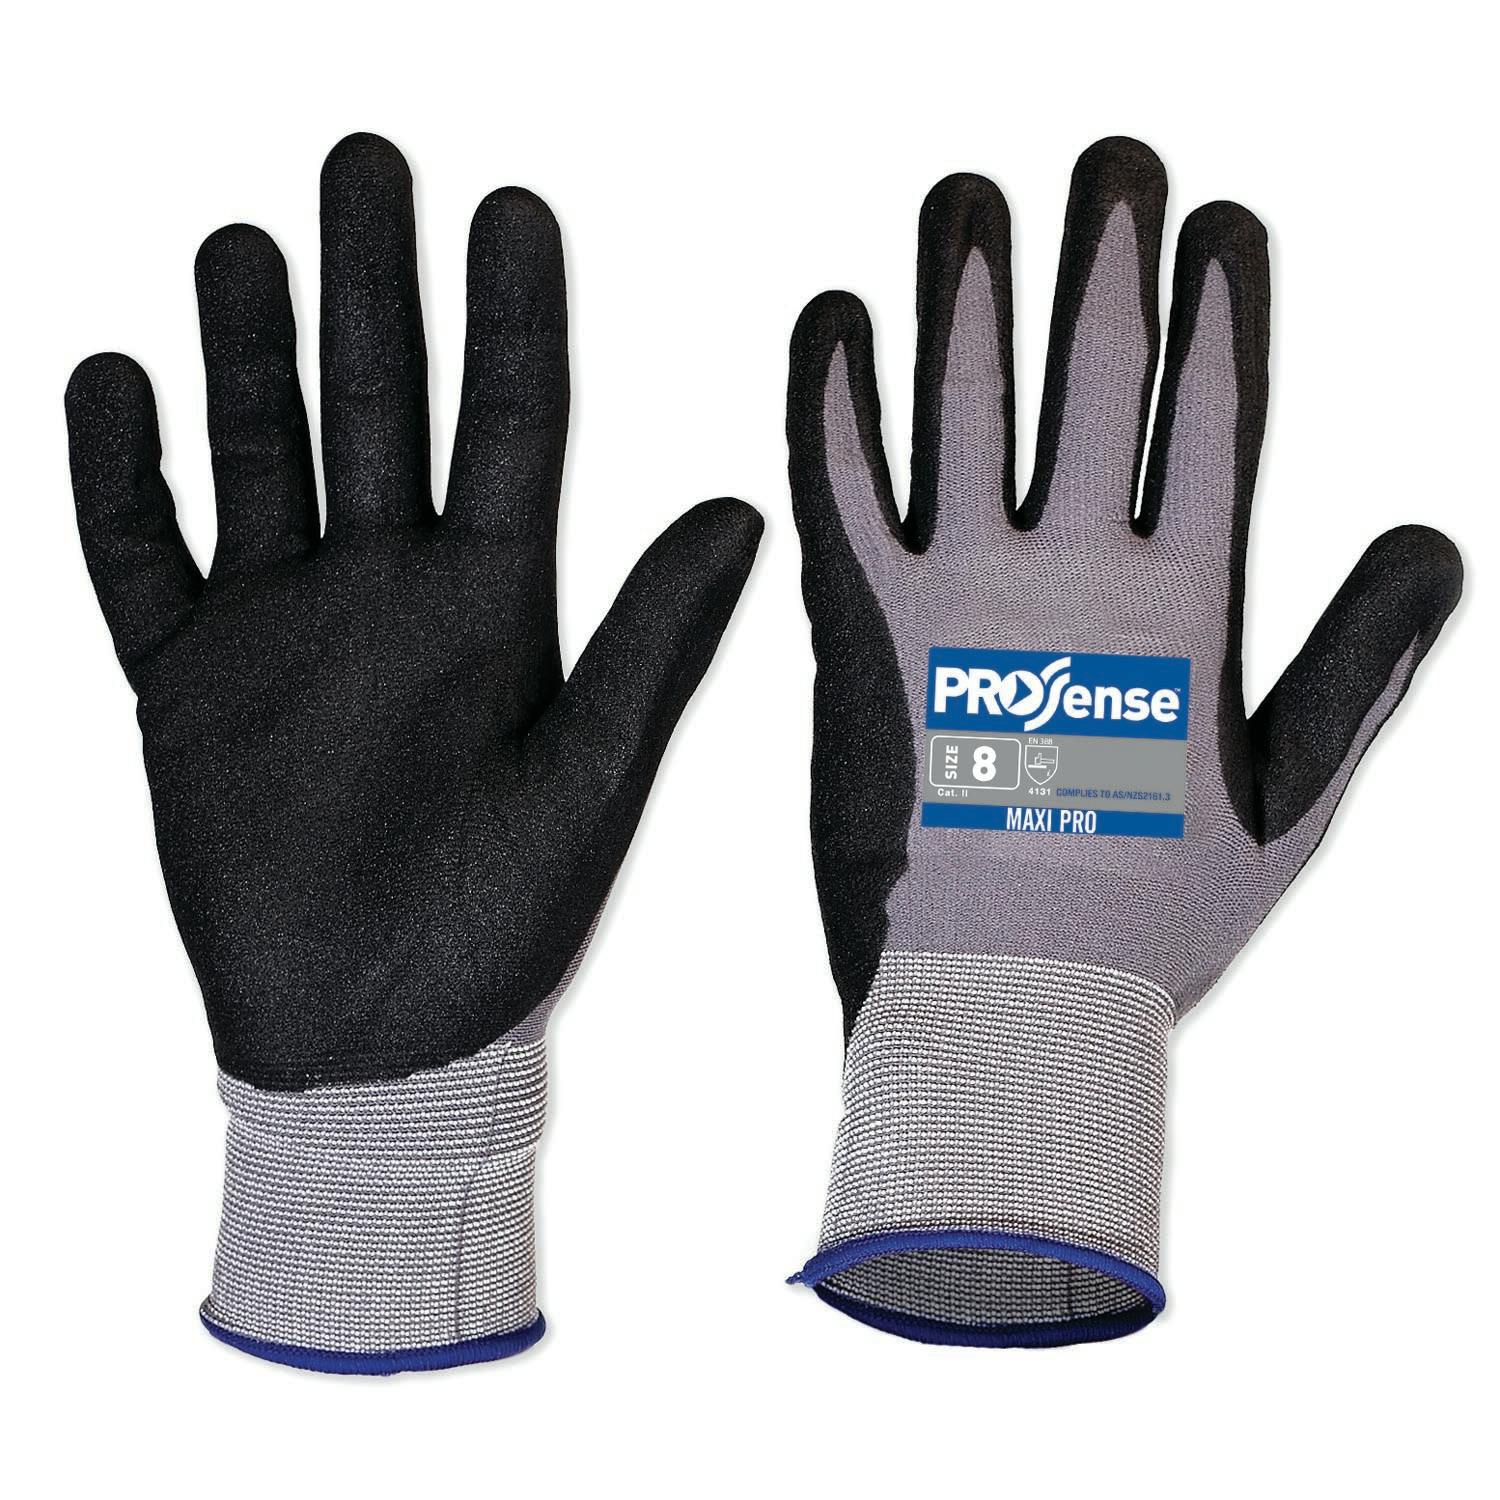 Pro Choice Prosense Maxi-Pro Gloves_4